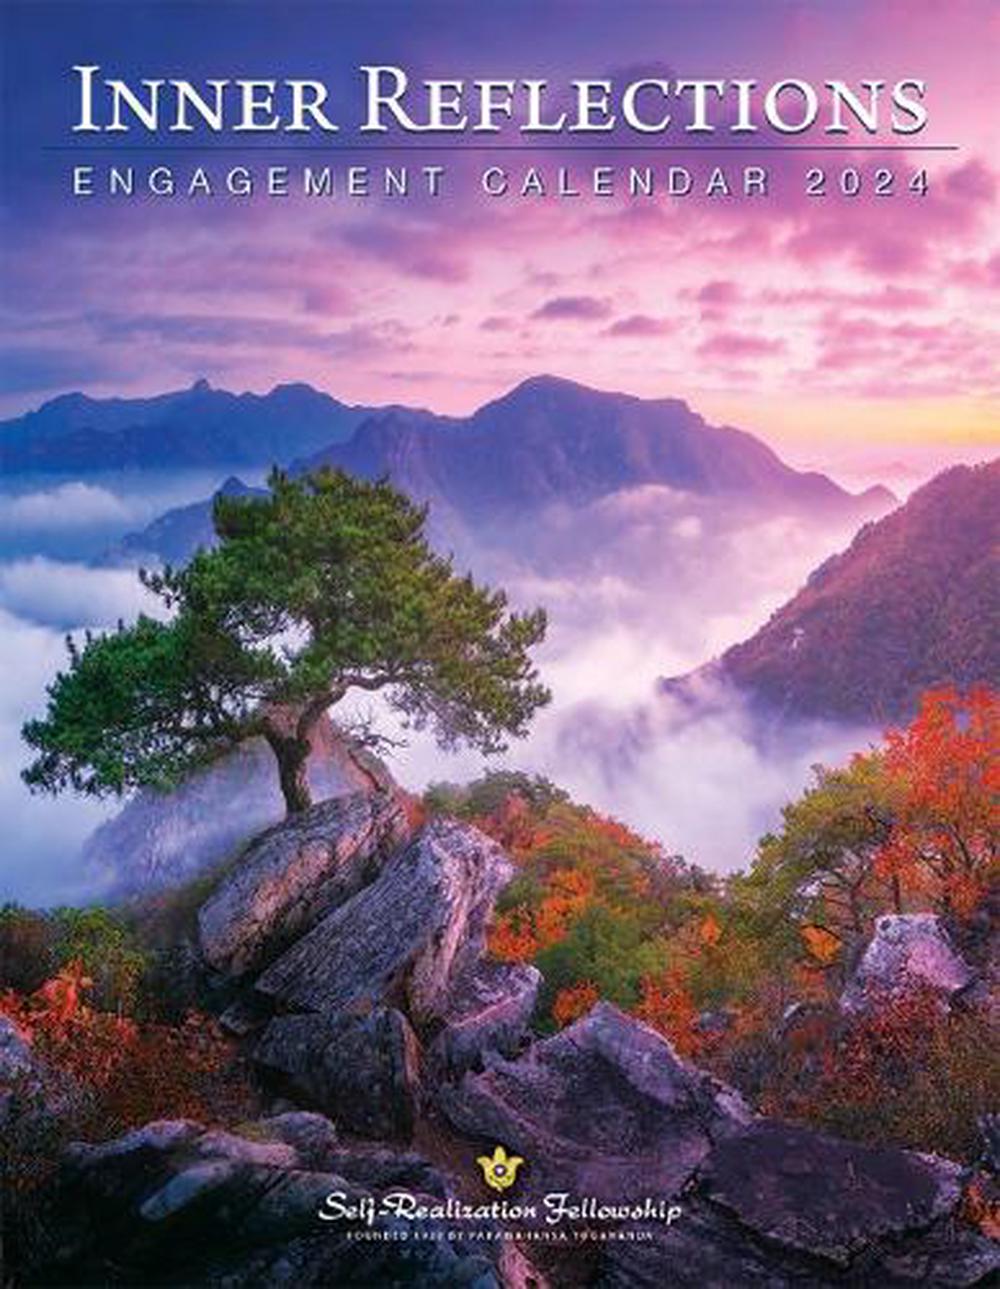 Inner Reflections Engagement Calendar 2024 by Paramahansa Yogananda